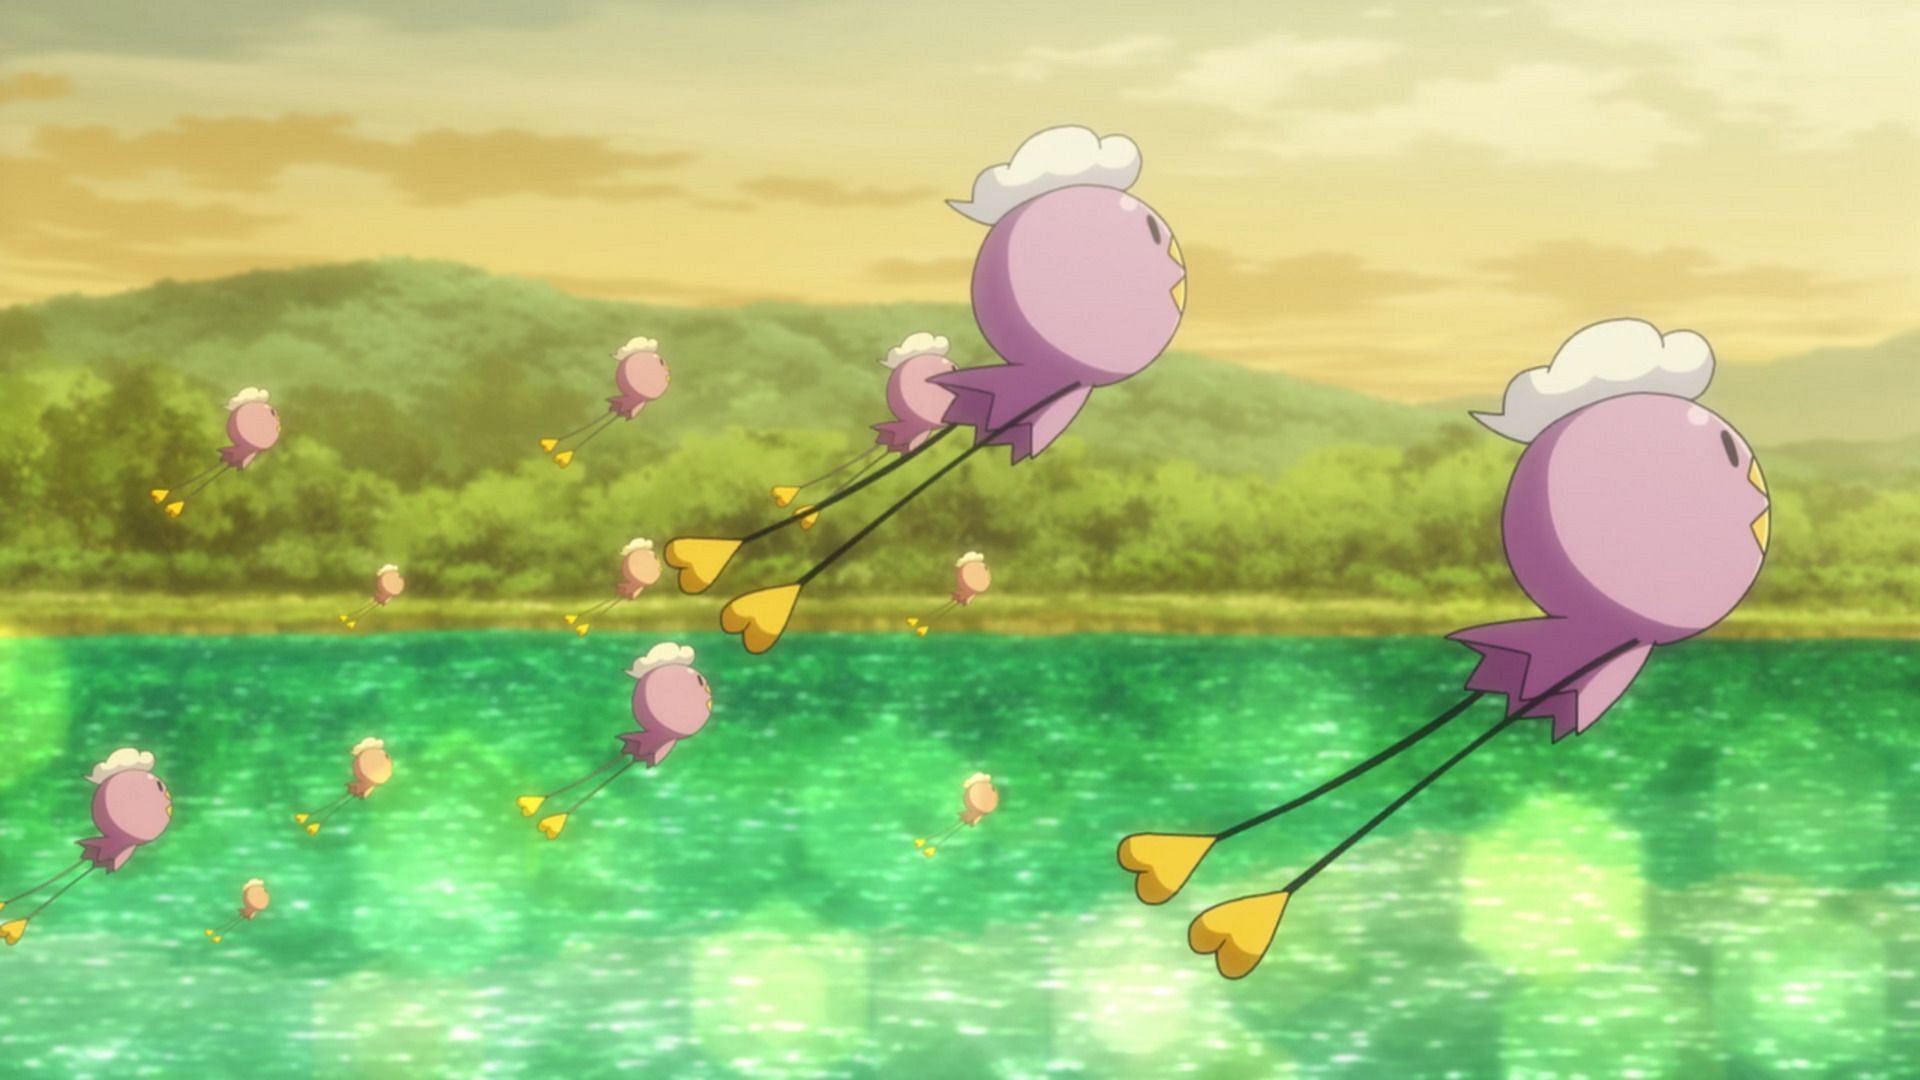 A screenshot from the anime (Image via The Pokemon Company)